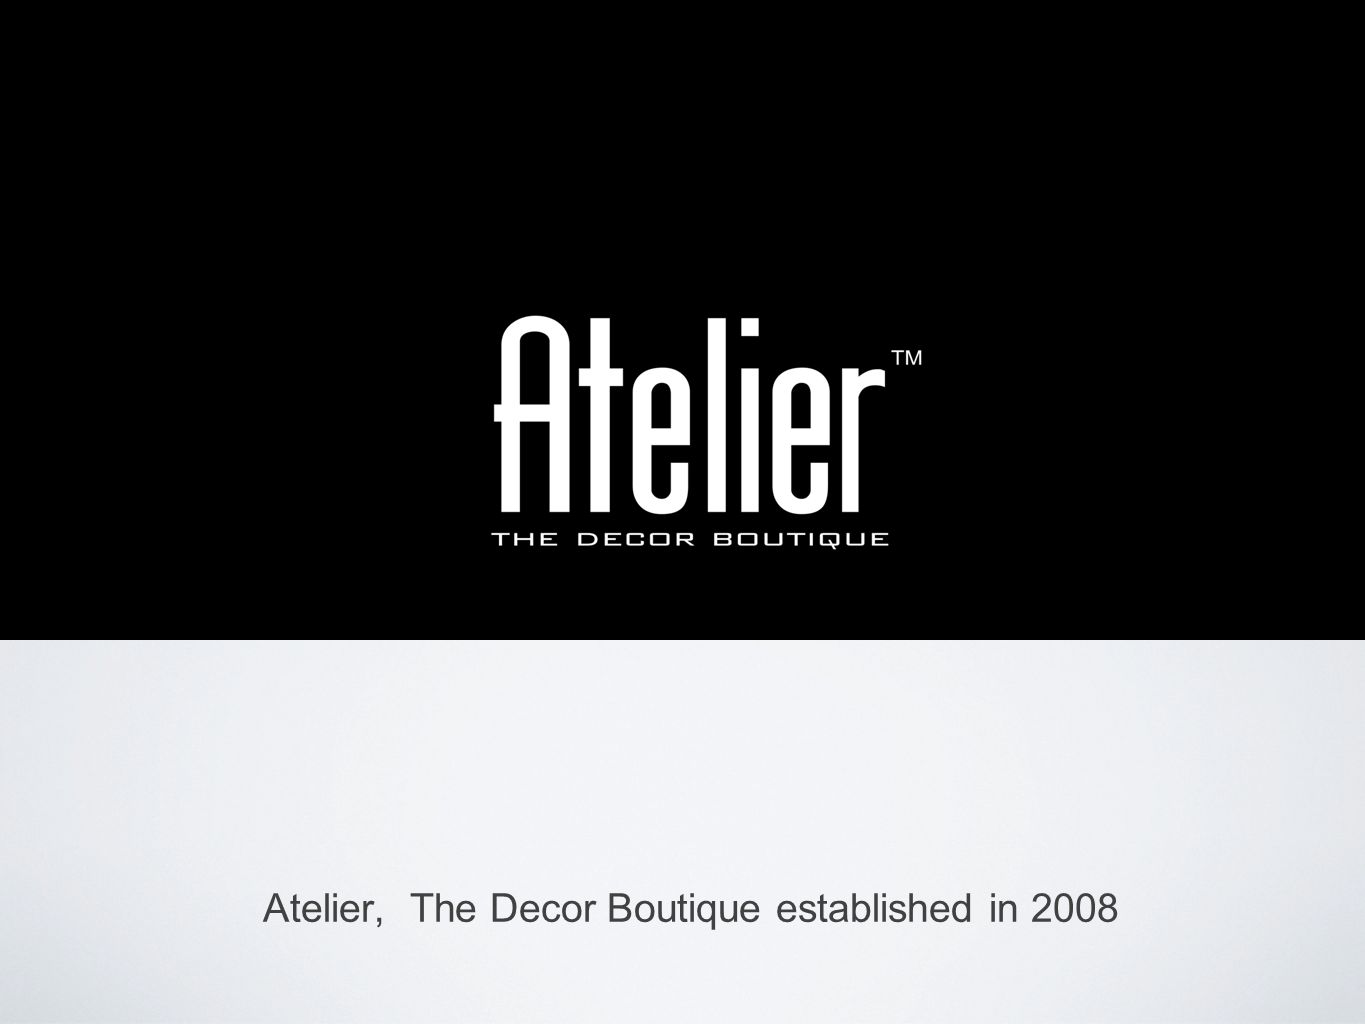 Atelier, The Decor Boutique established in 2008